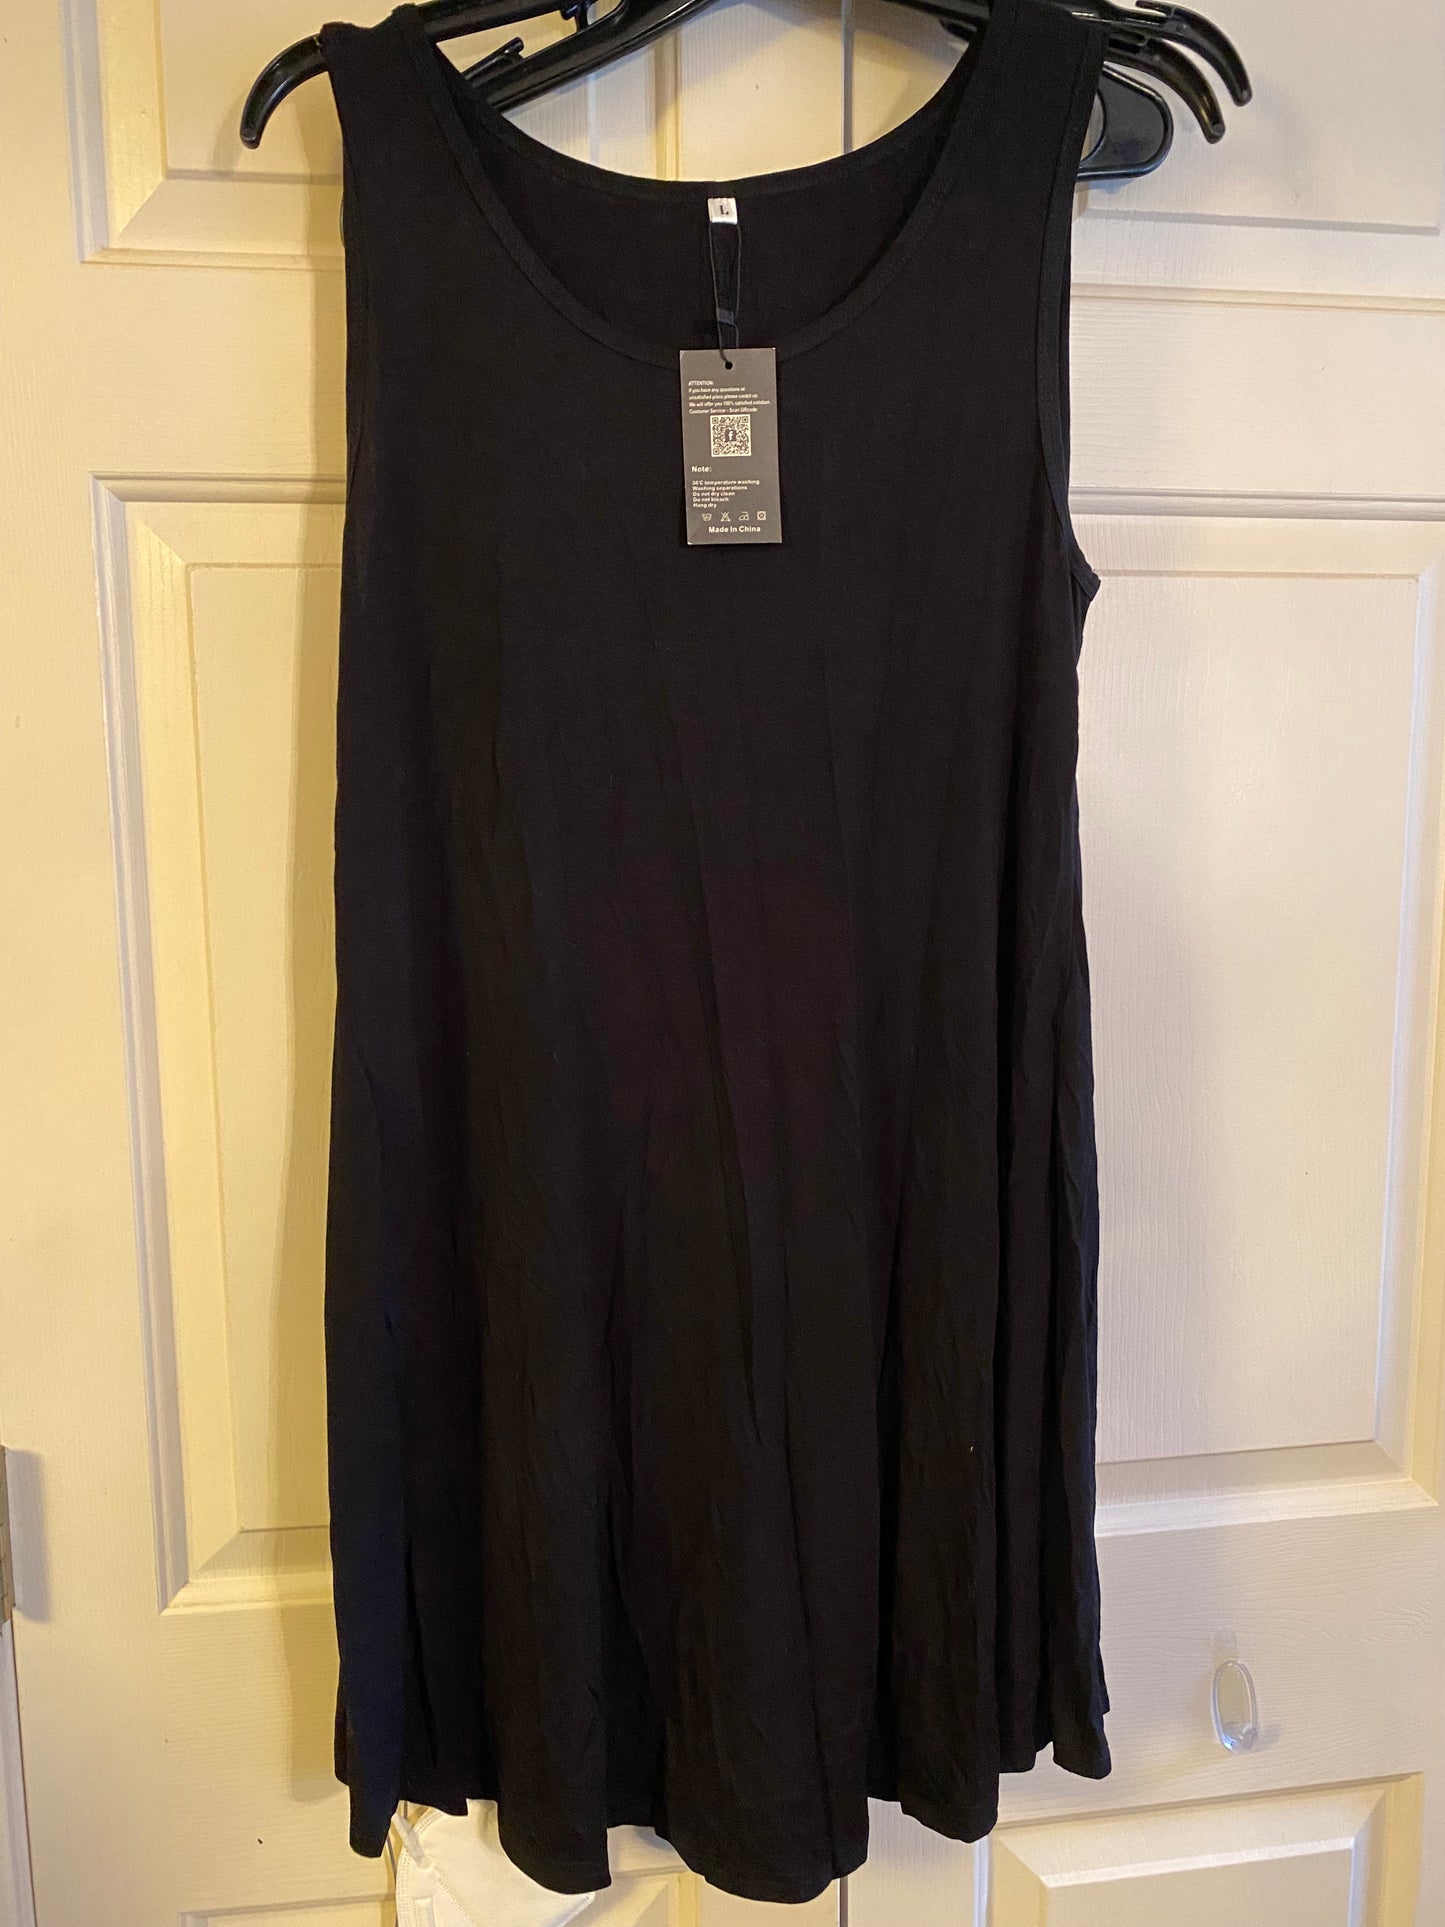 MOLERANI Women's Casual Swing Simple T-Shirt Loose Dress, Black, Large (L) NWOT